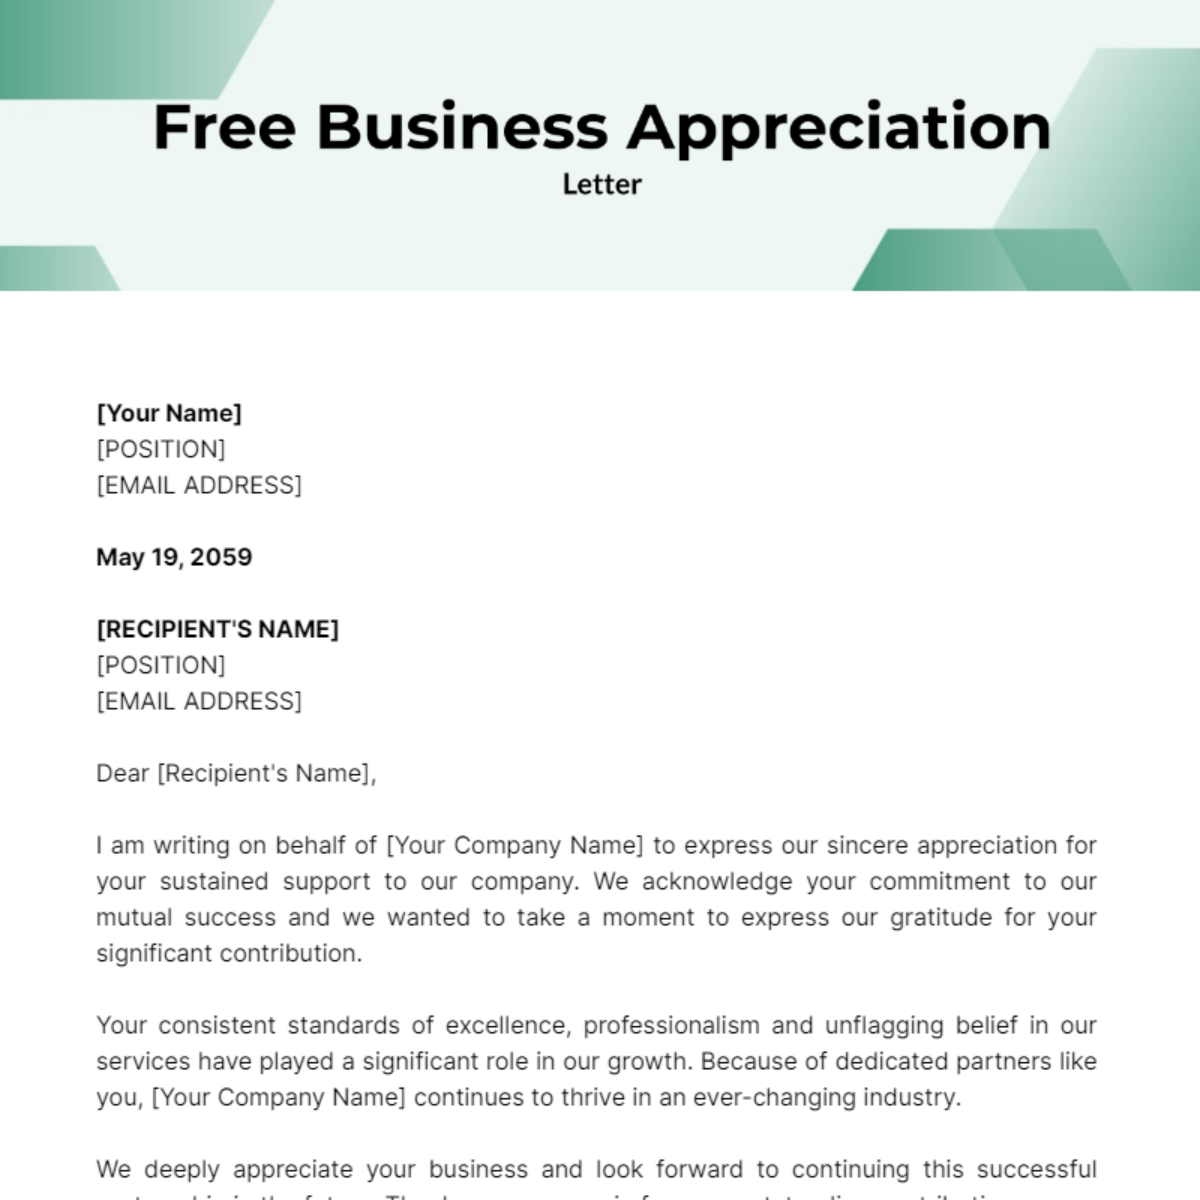 Business Appreciation Letter Template